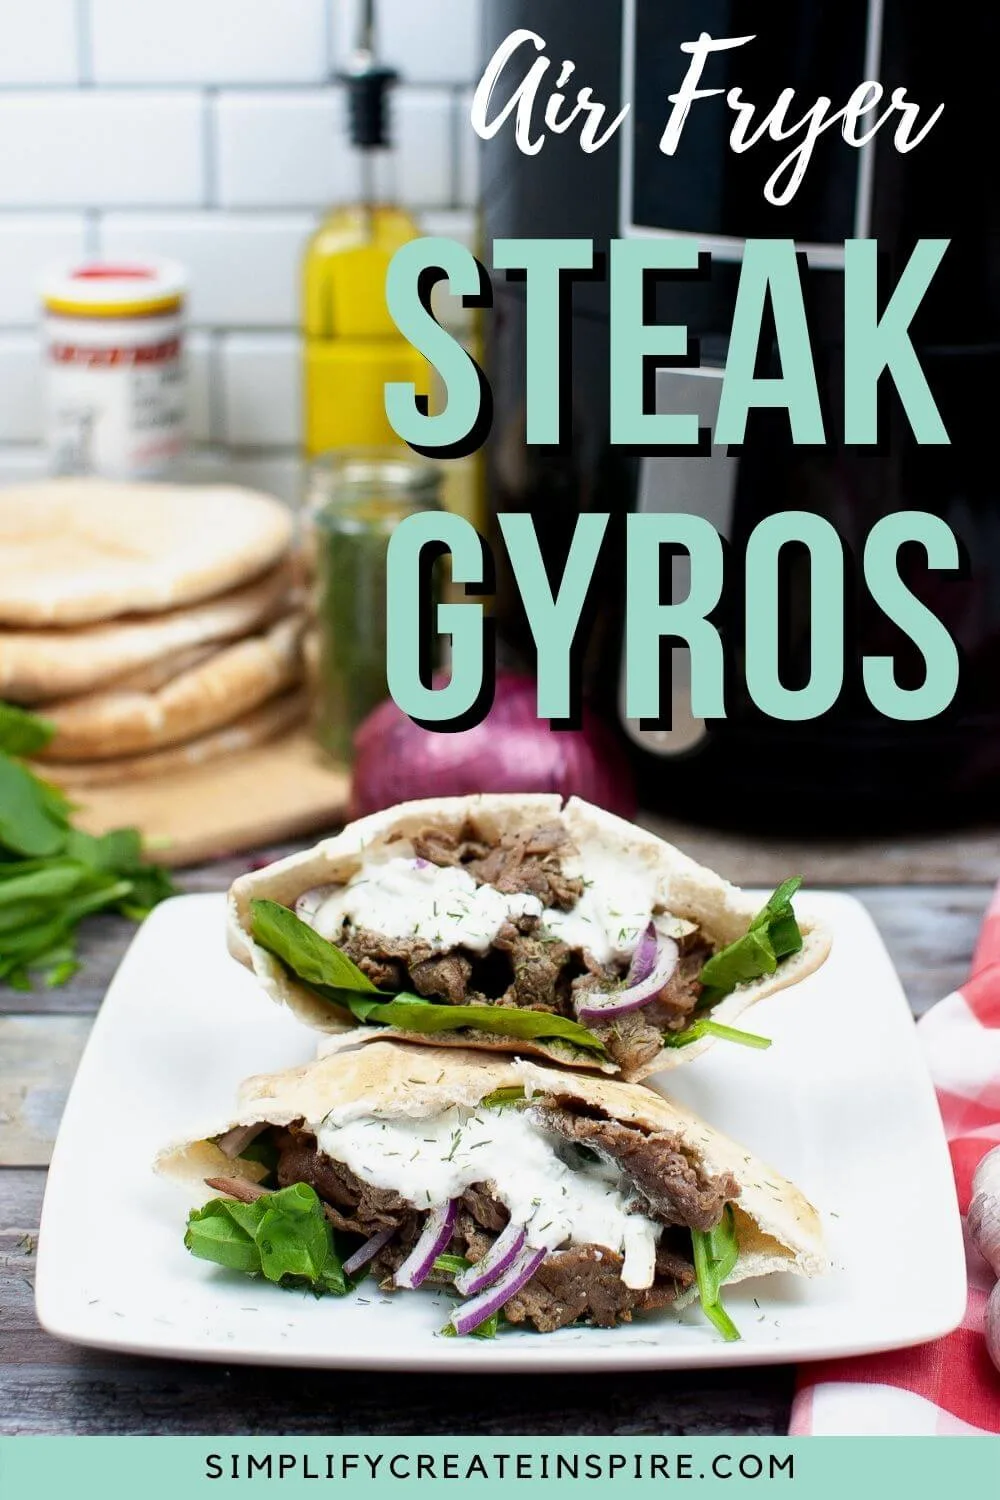 Air fryer steak gyros recipe with homemade tzatziki sauce